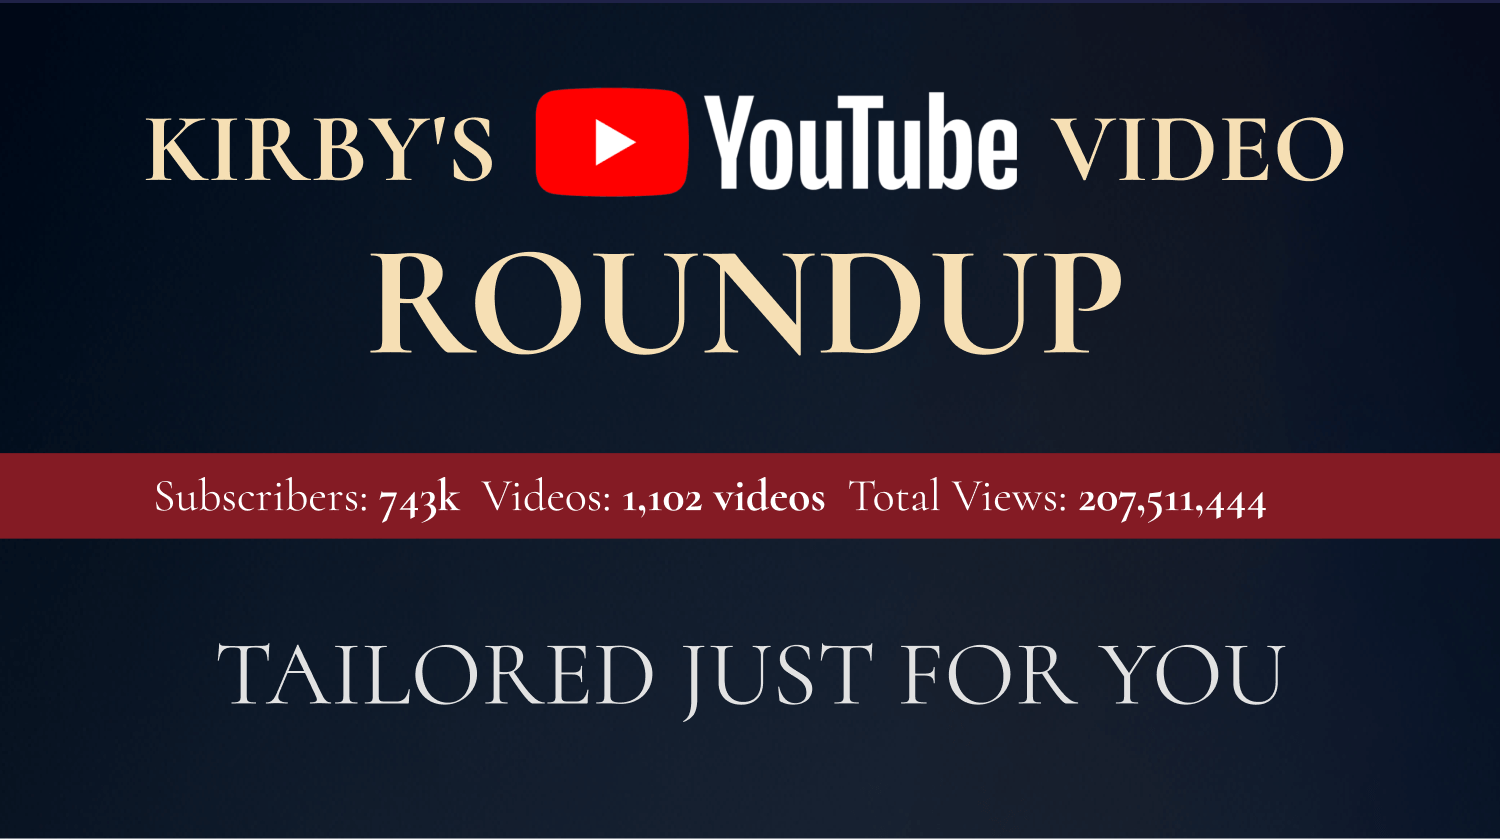 KIRBY'S YOUTUBE VIDEO ROUNDUP